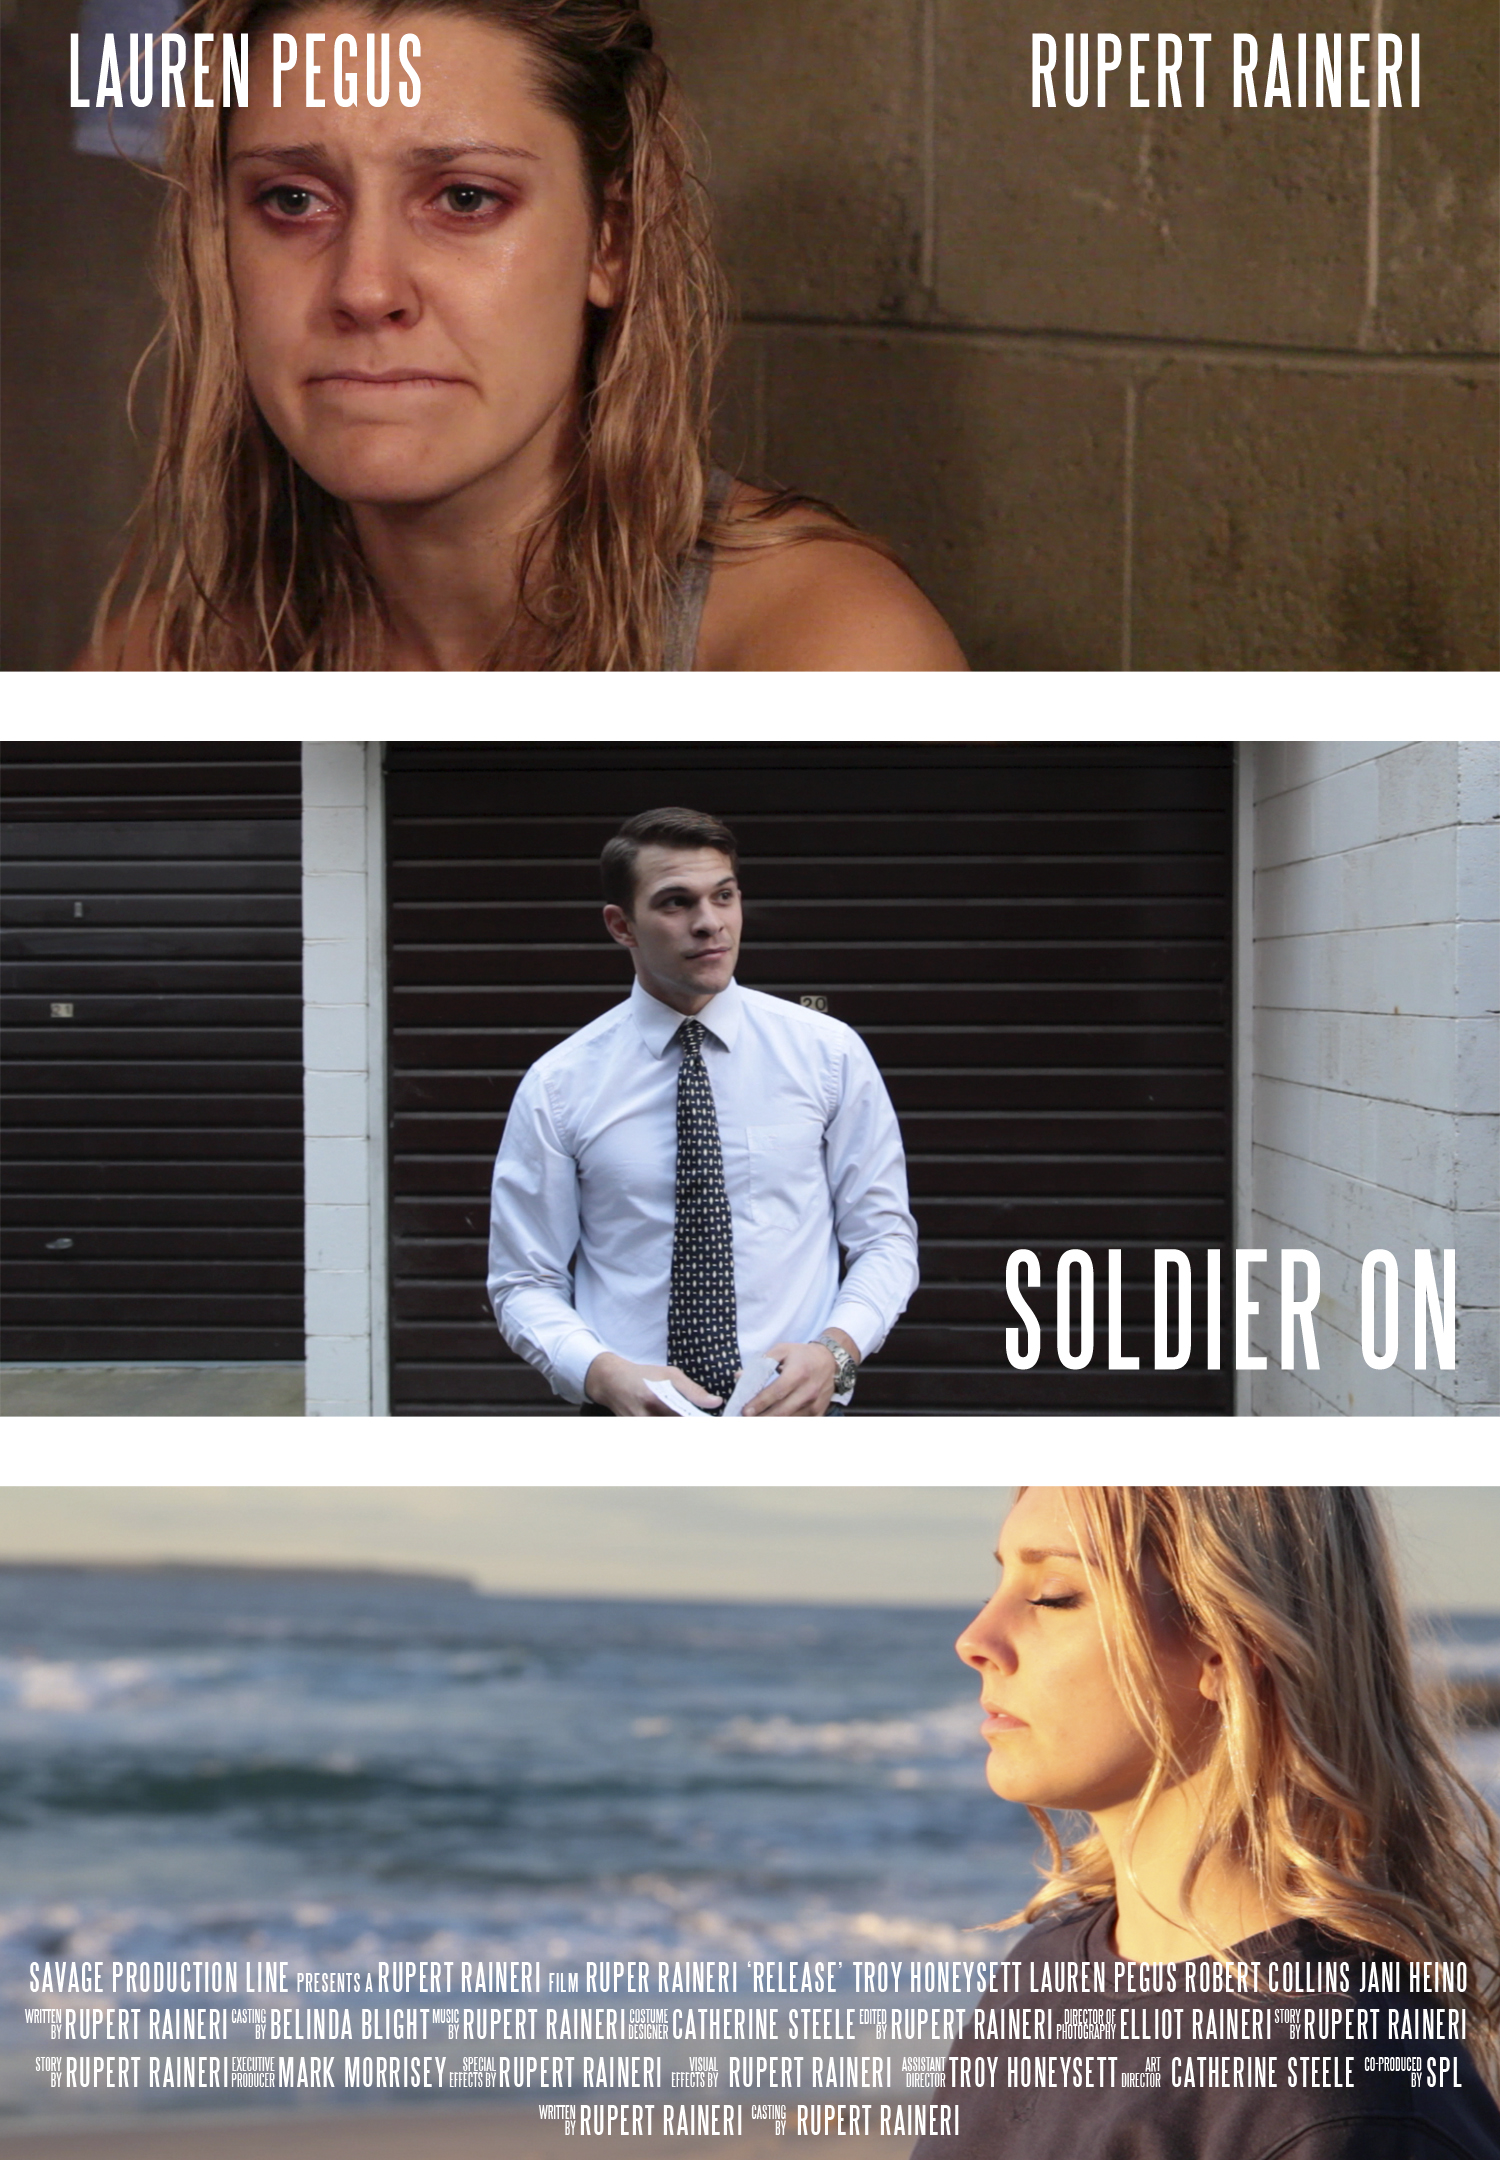 Soldier On featuring Rupert Raineri and Lauren Pegus